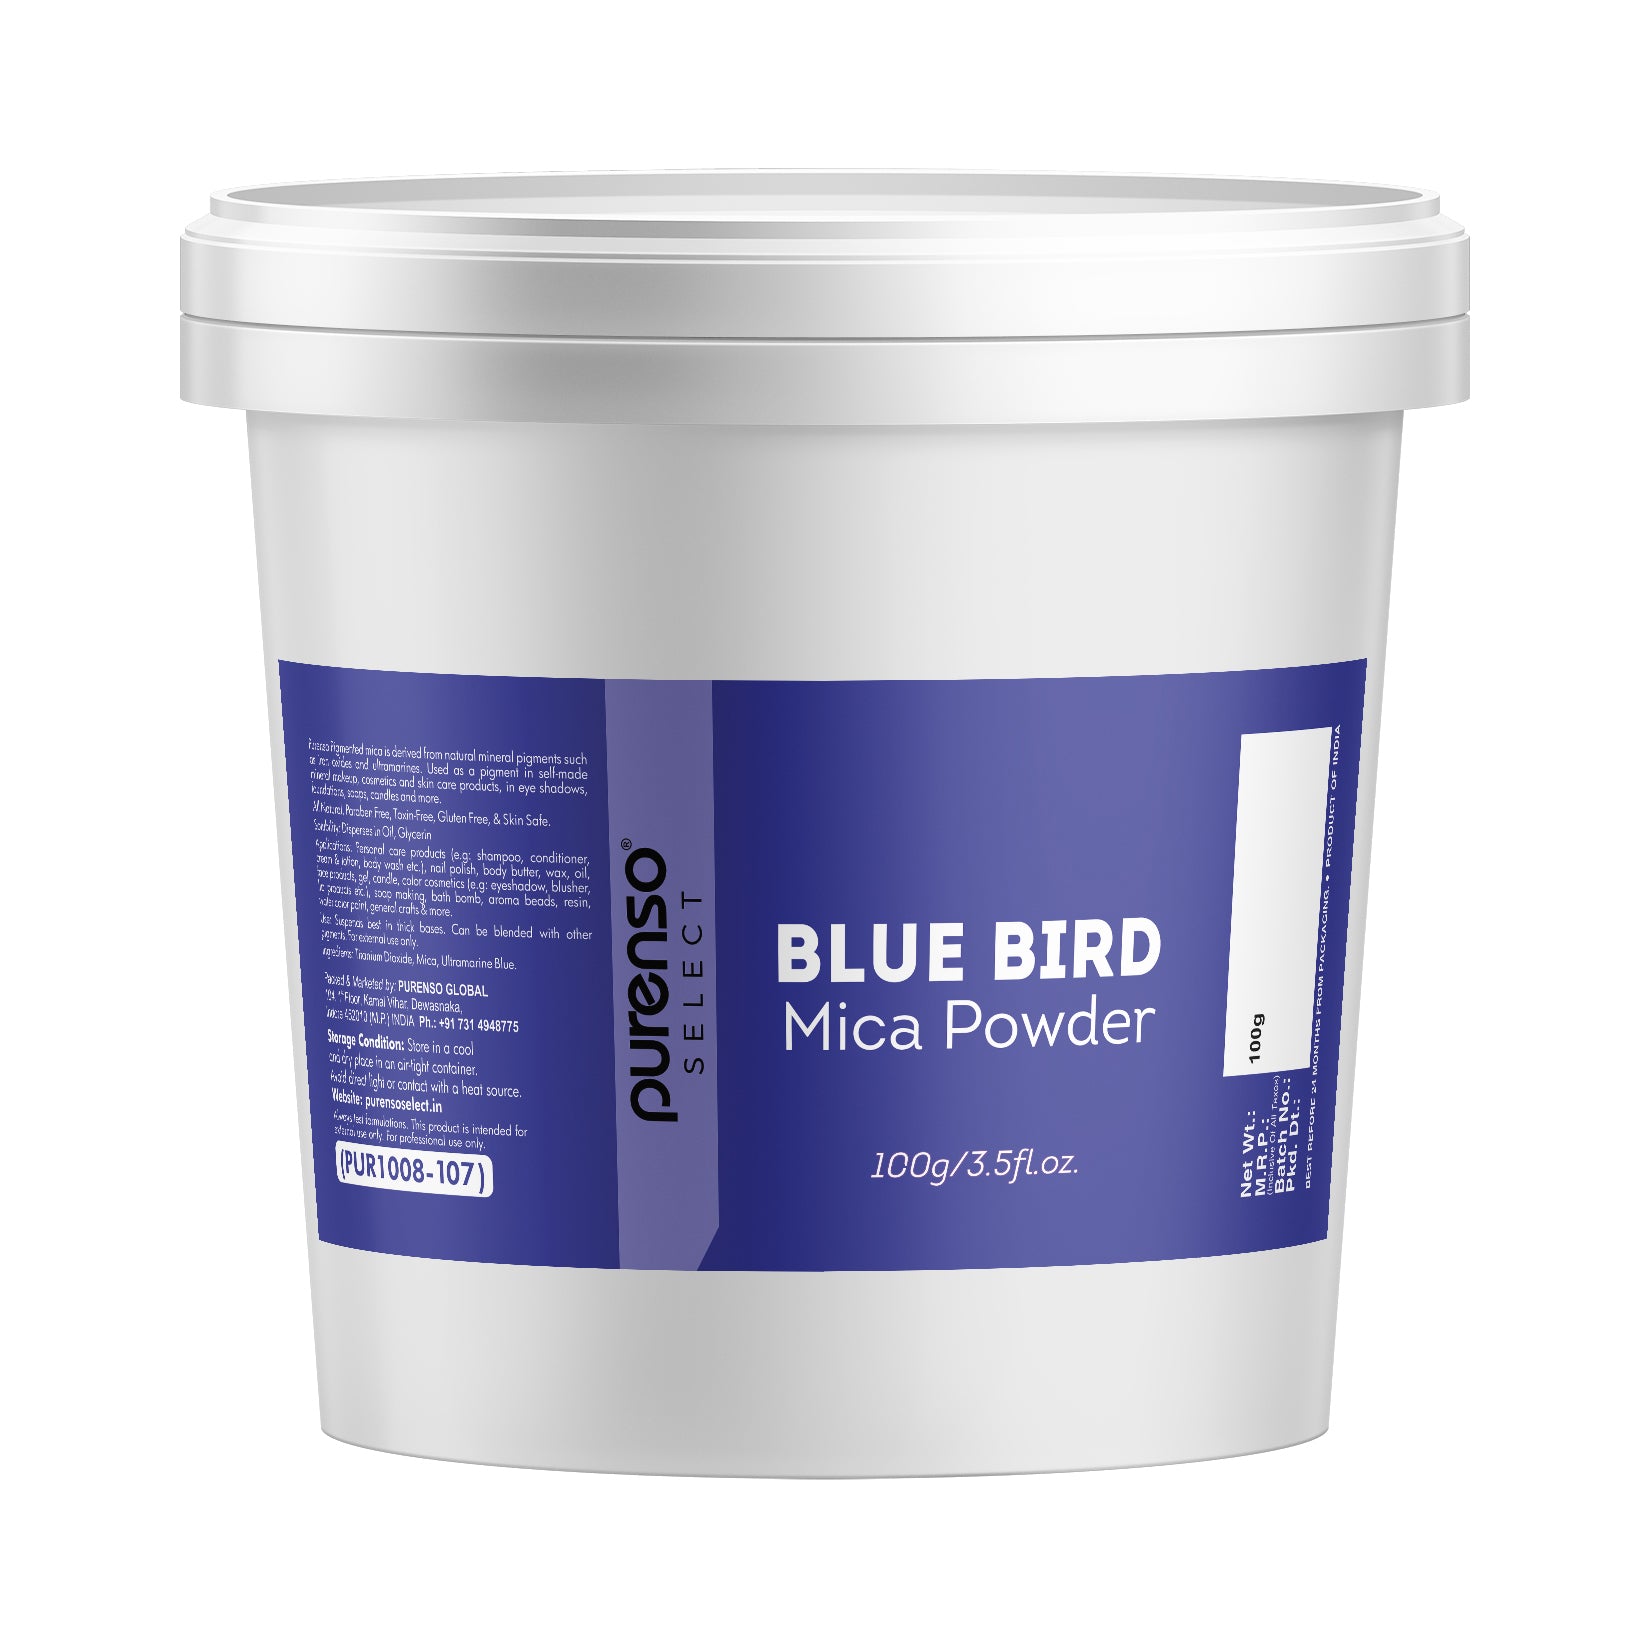 Blue Bird Mica Powder